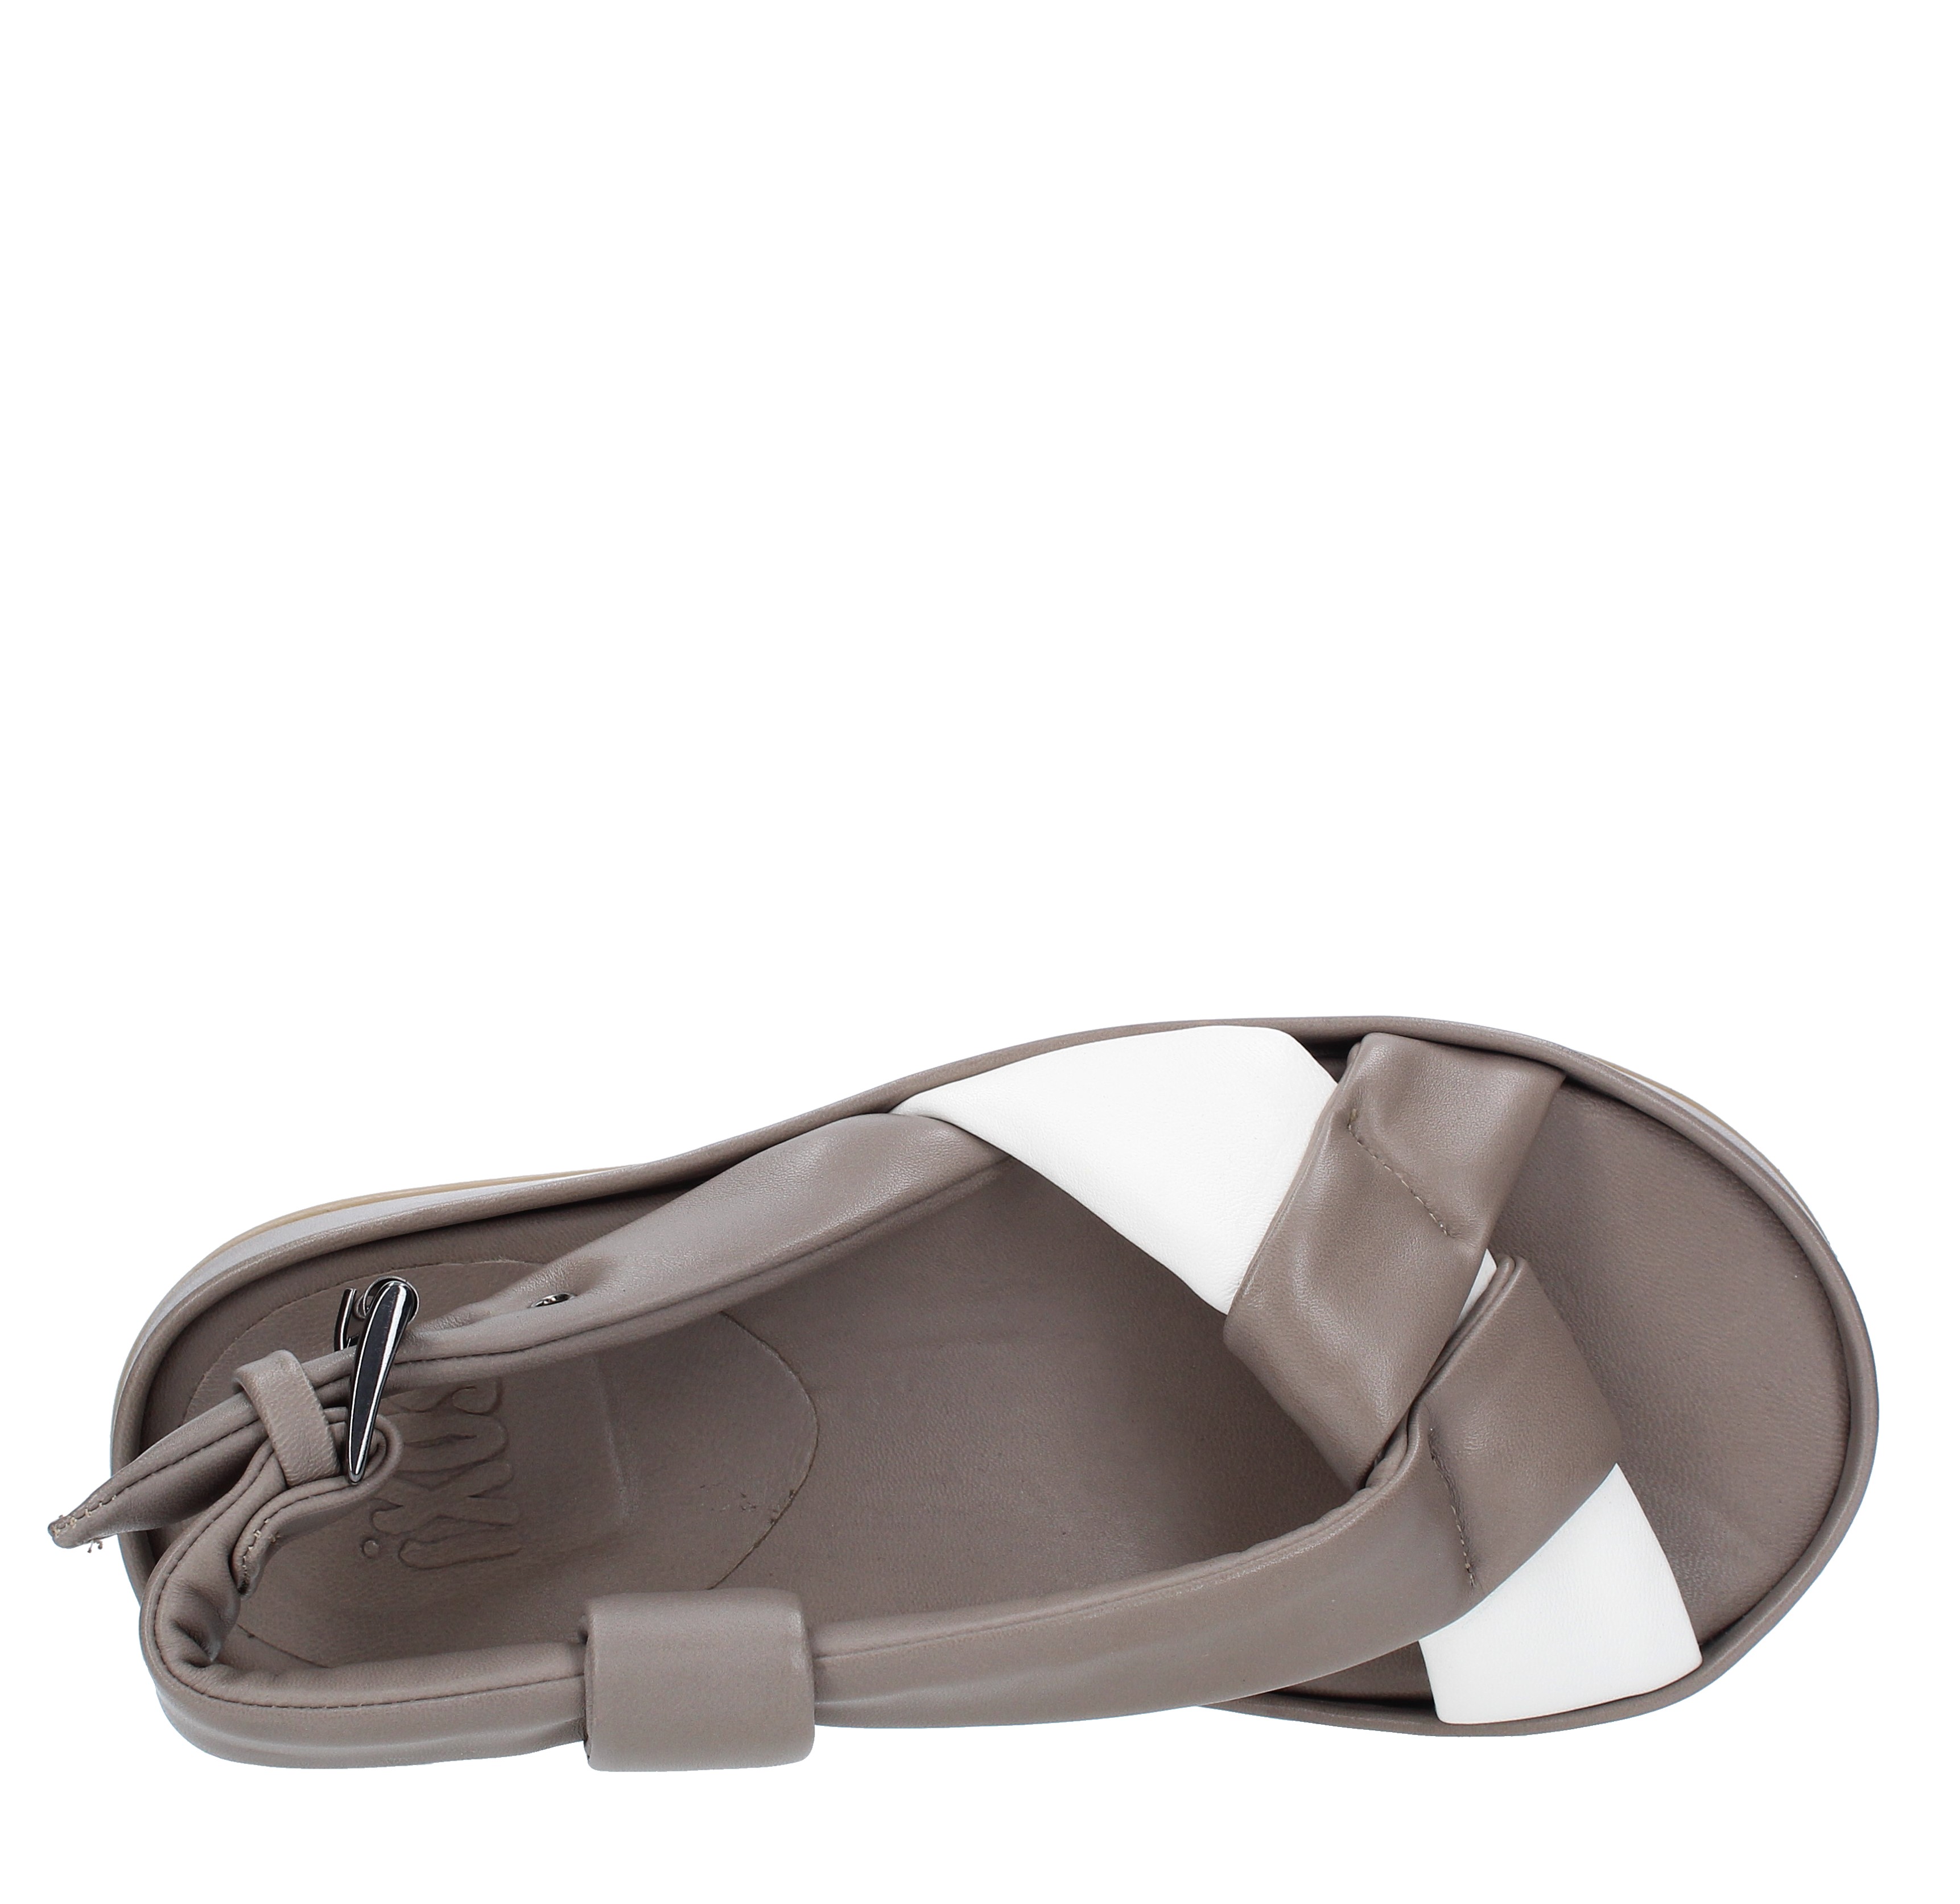 Sandali flat in pelle - IXOS - Ginevra calzature